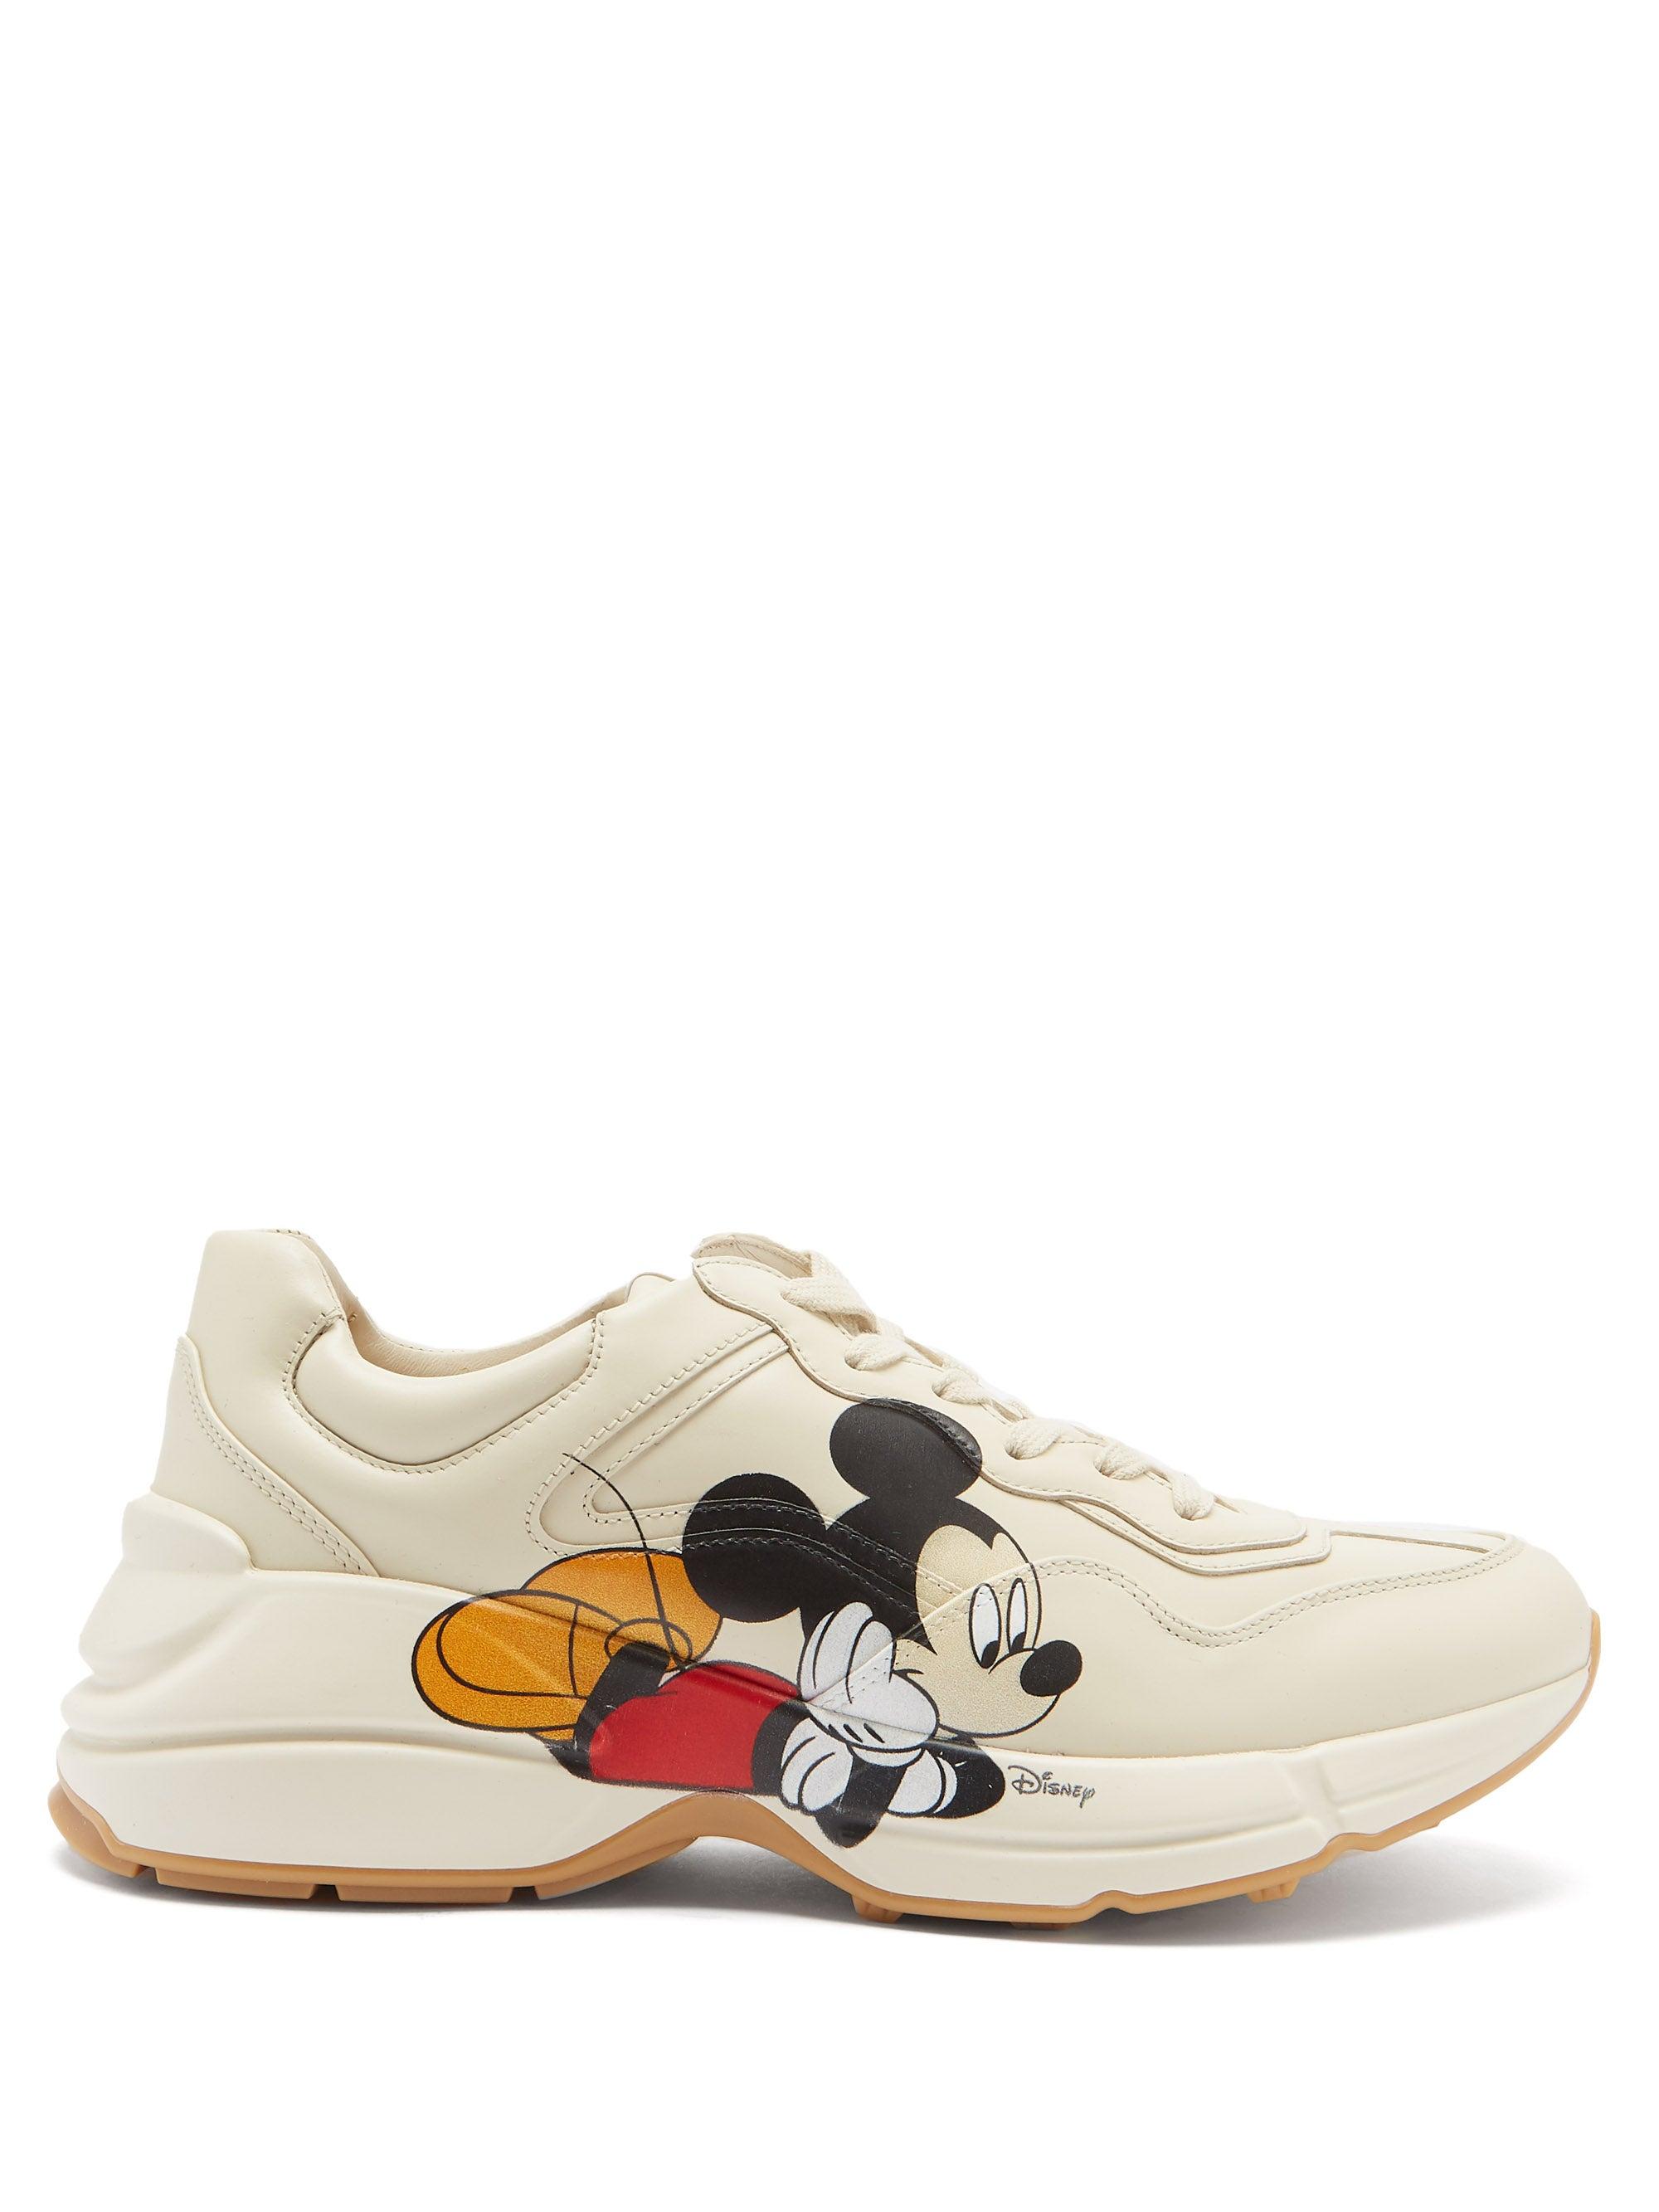 GUCCI x Disney Rhyton Mickey Mouse Leather Sneakers Men 10.5 | eBay